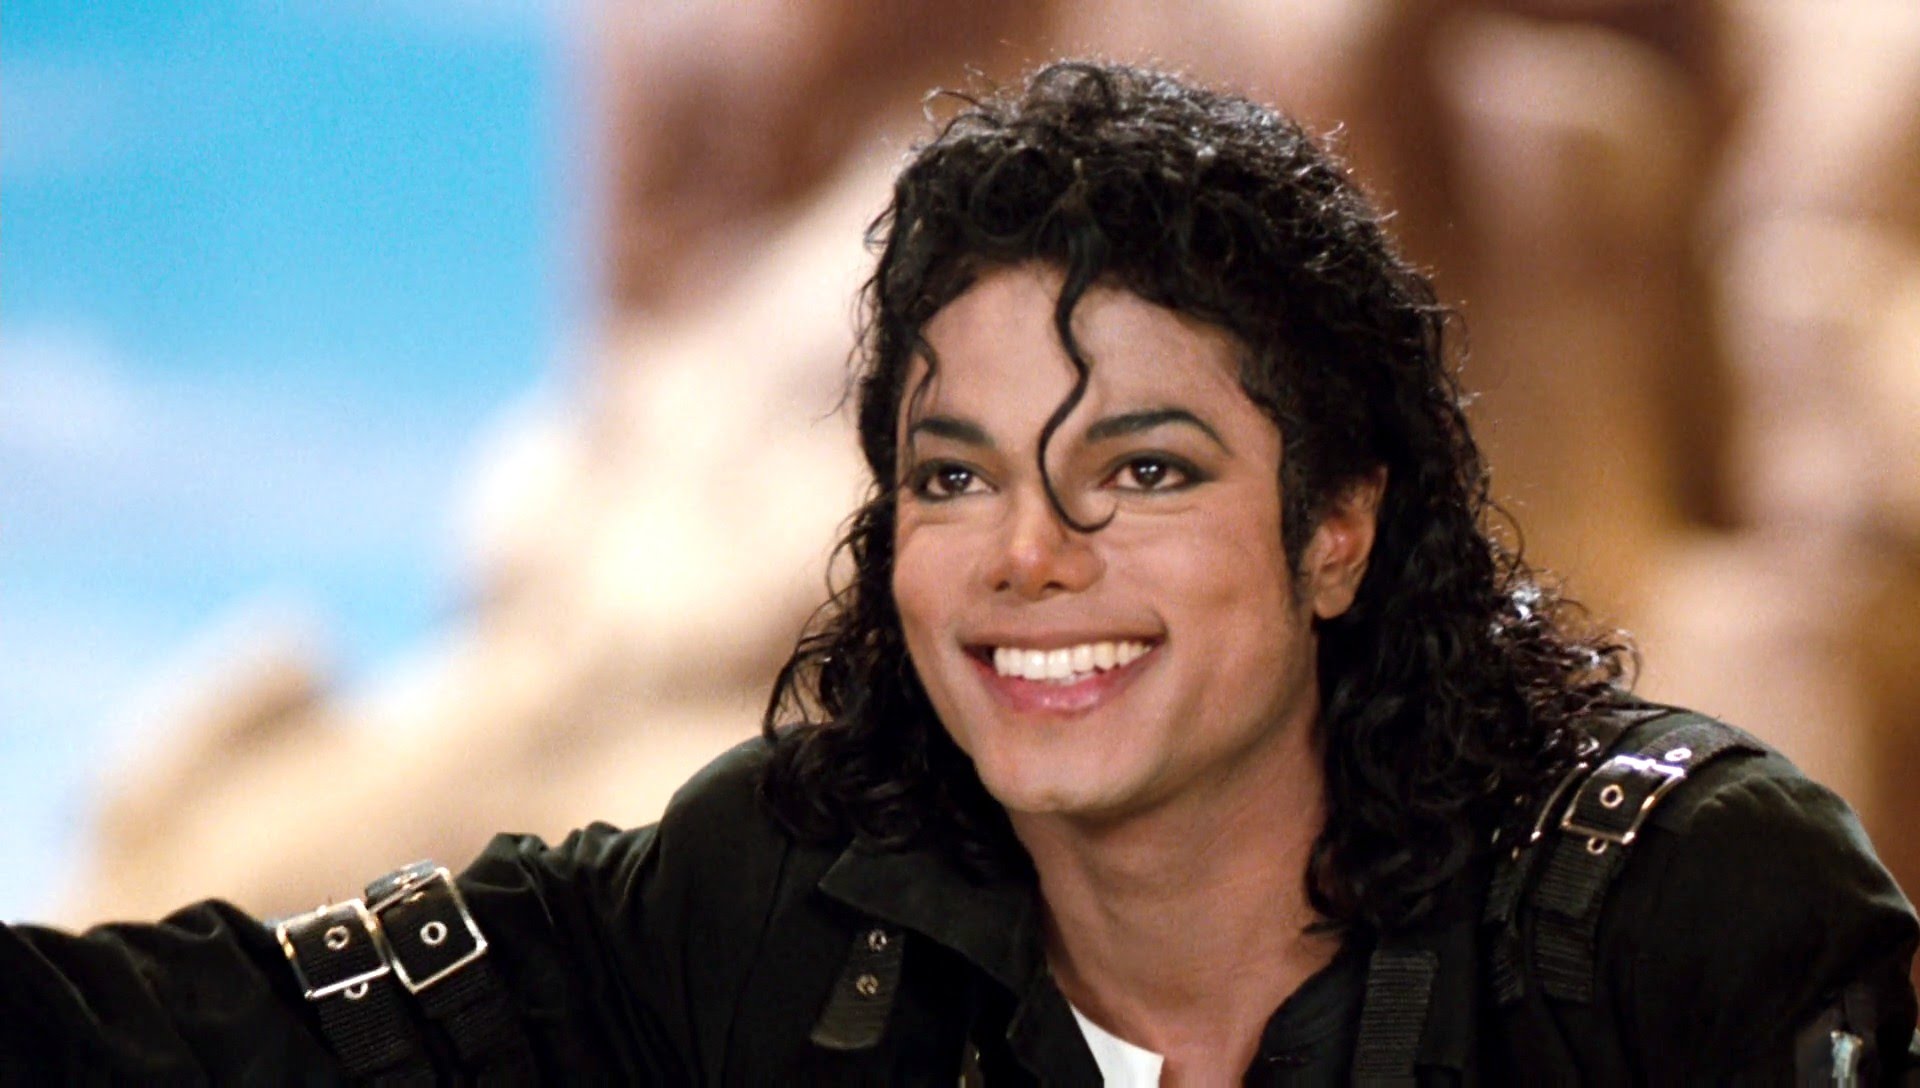 Michael Jackson 1980s